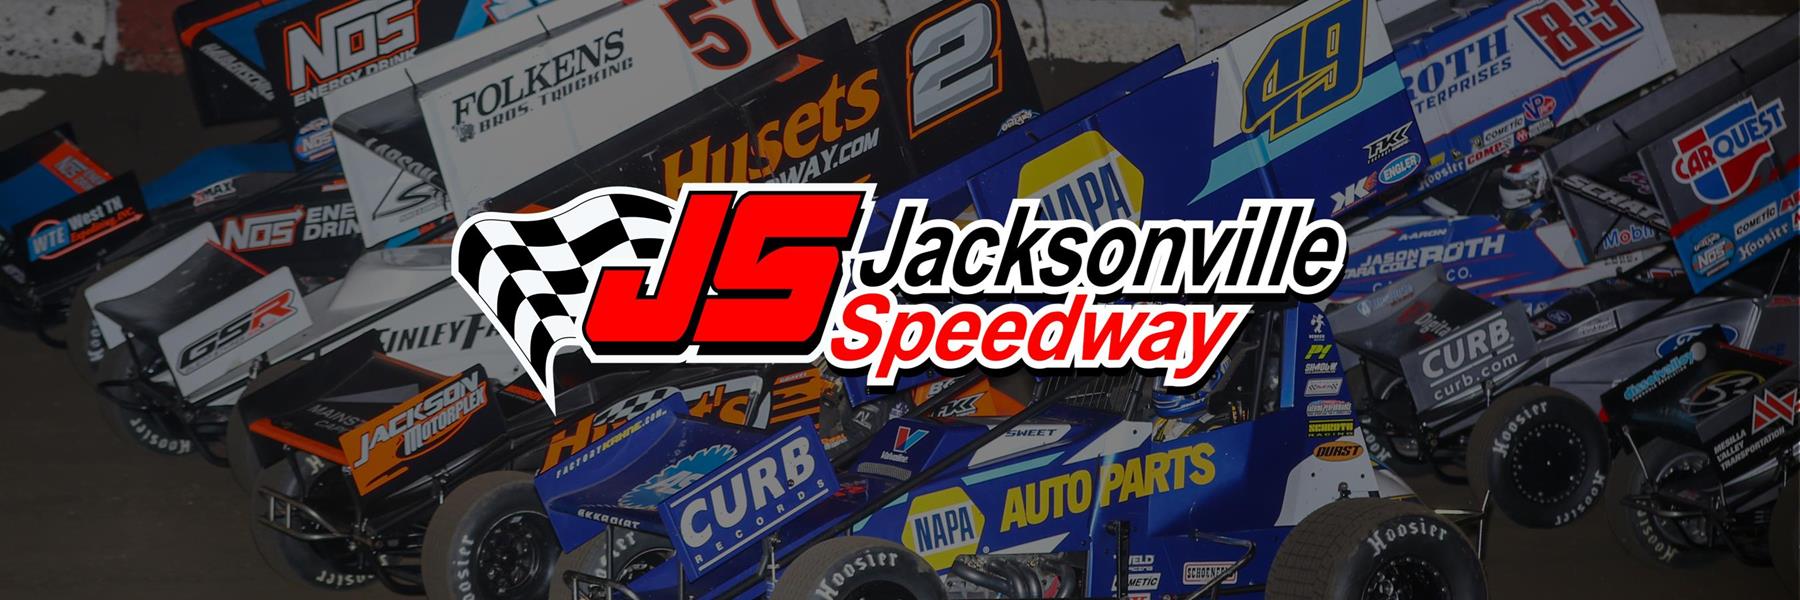 7/22/2022 - Jacksonville Speedway